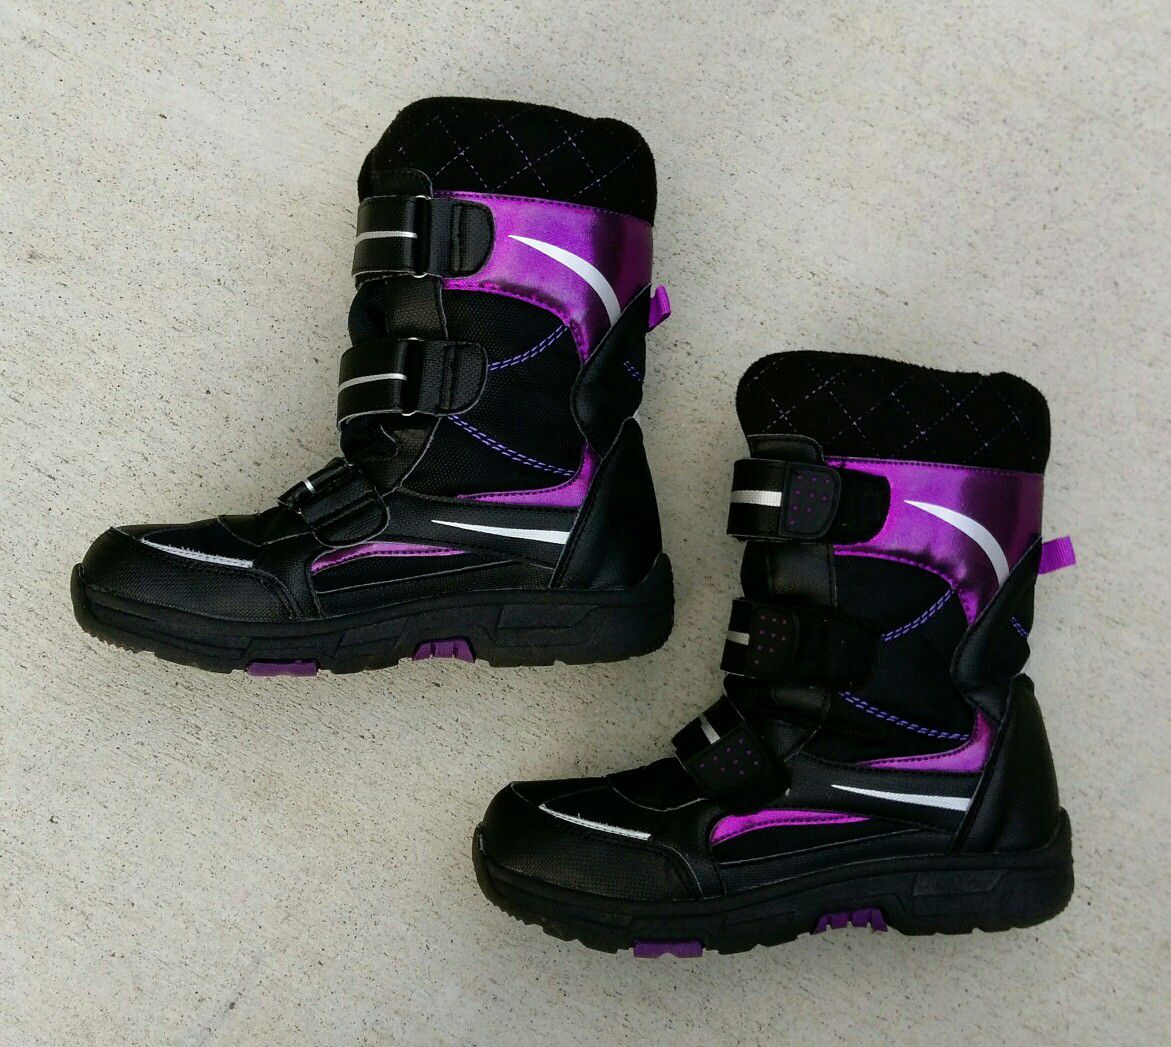 Khombu kids children's 2M snow walker boots black/pink/purple